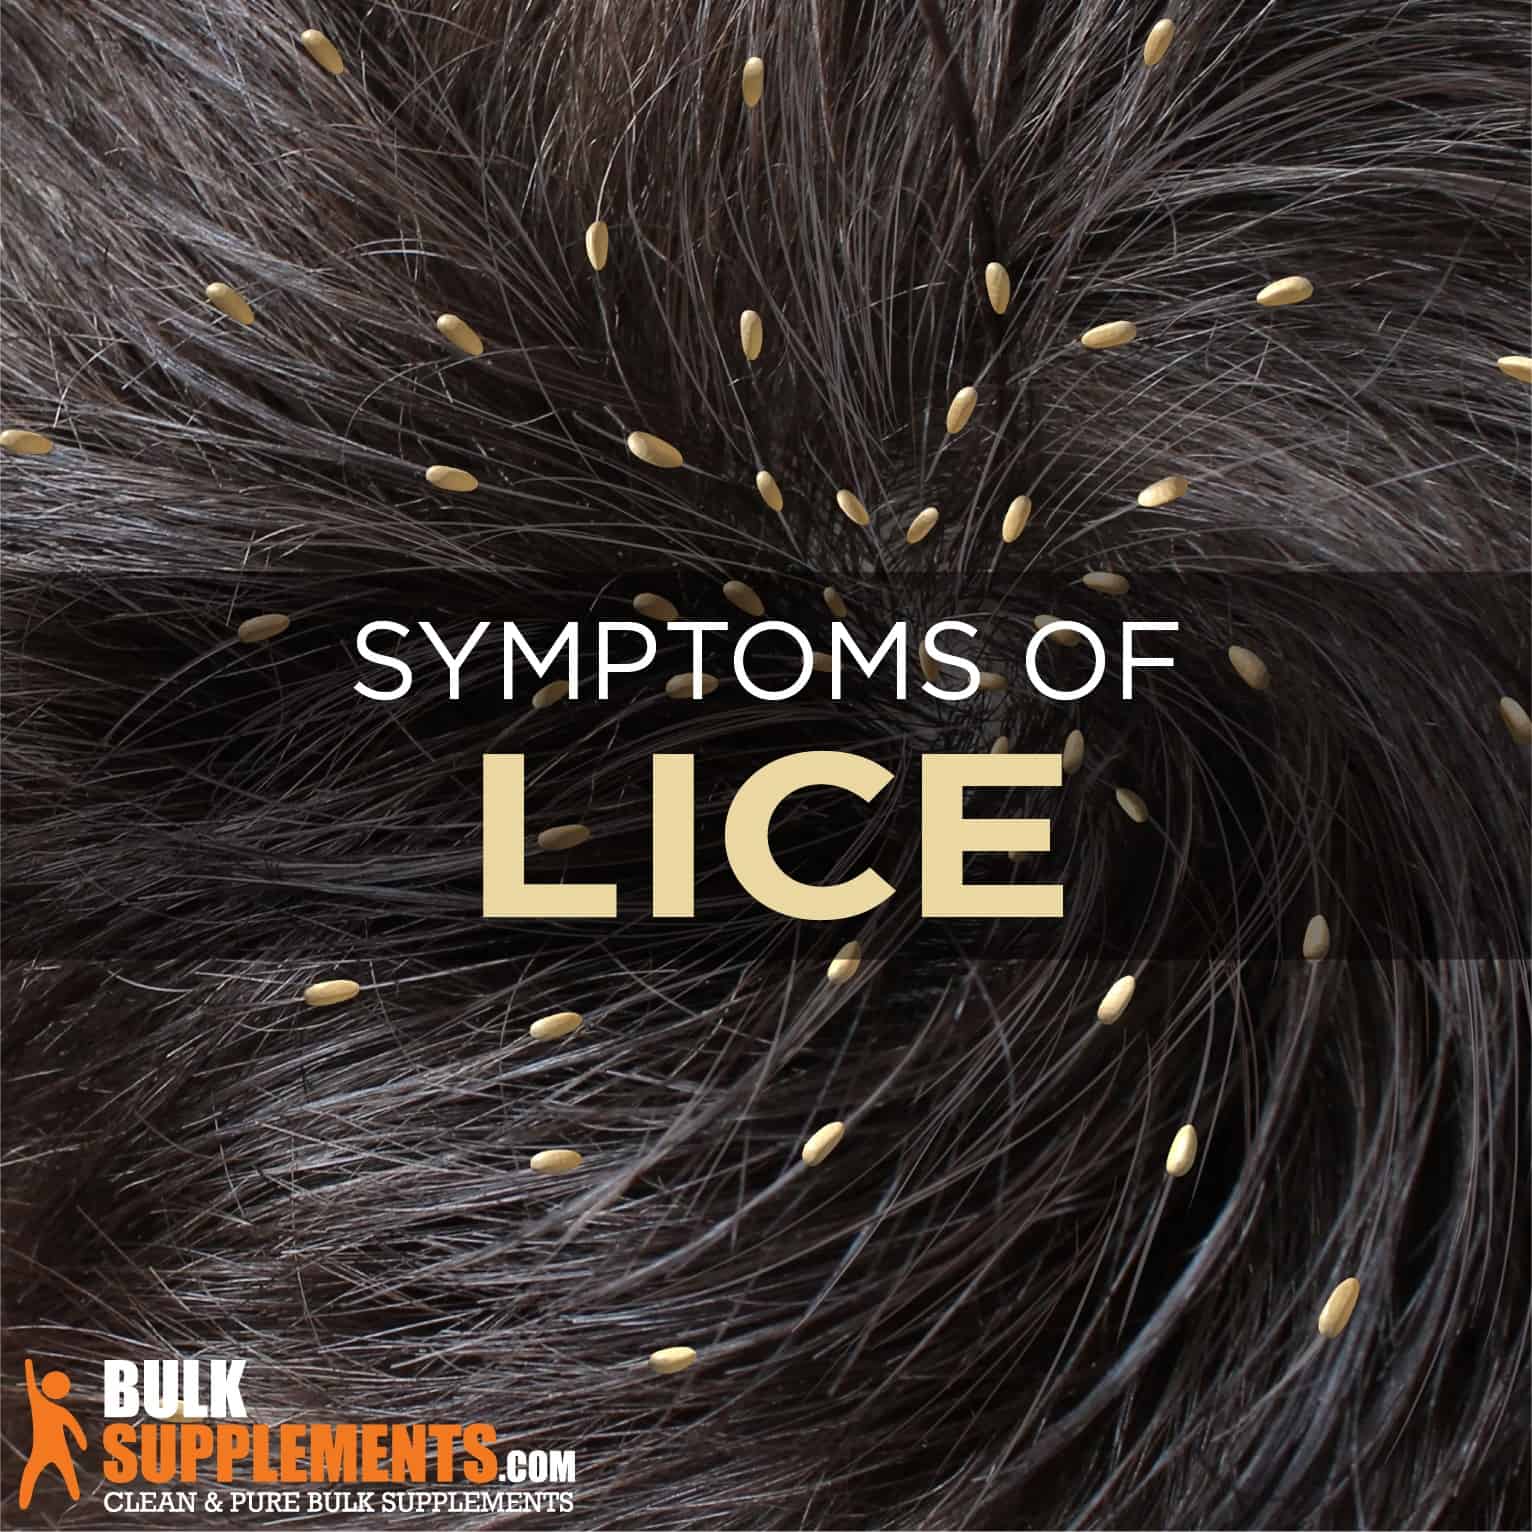 Lice: Symptoms, Causes & Treatment by James Denlinger